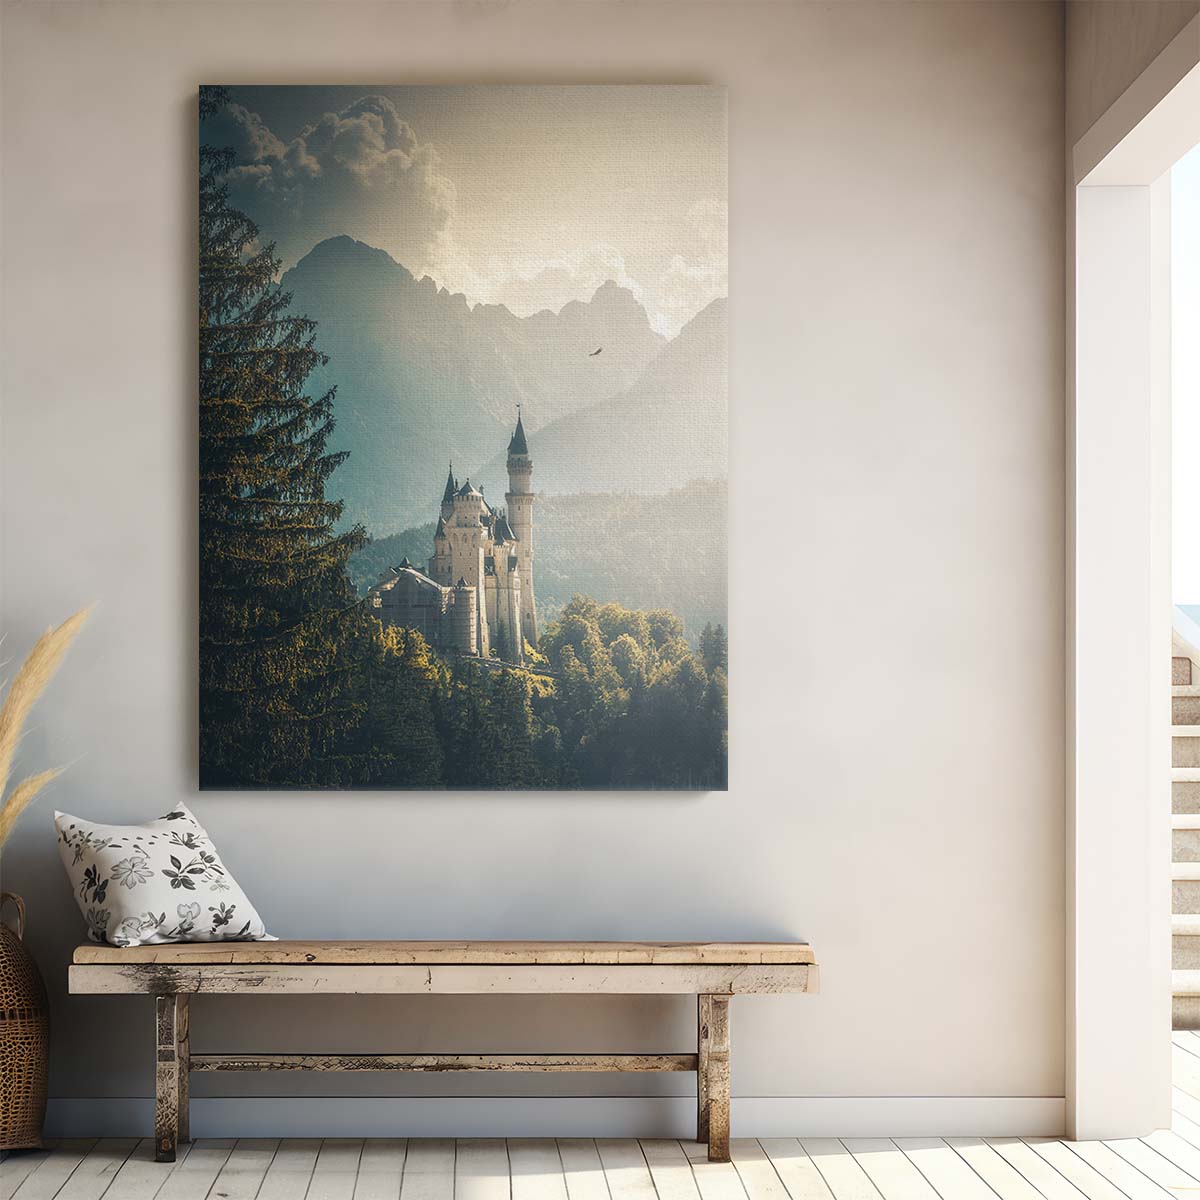 Medieval Neuschwanstein Castle Landscape Photography Wall Art by Luxuriance Designs, made in USA